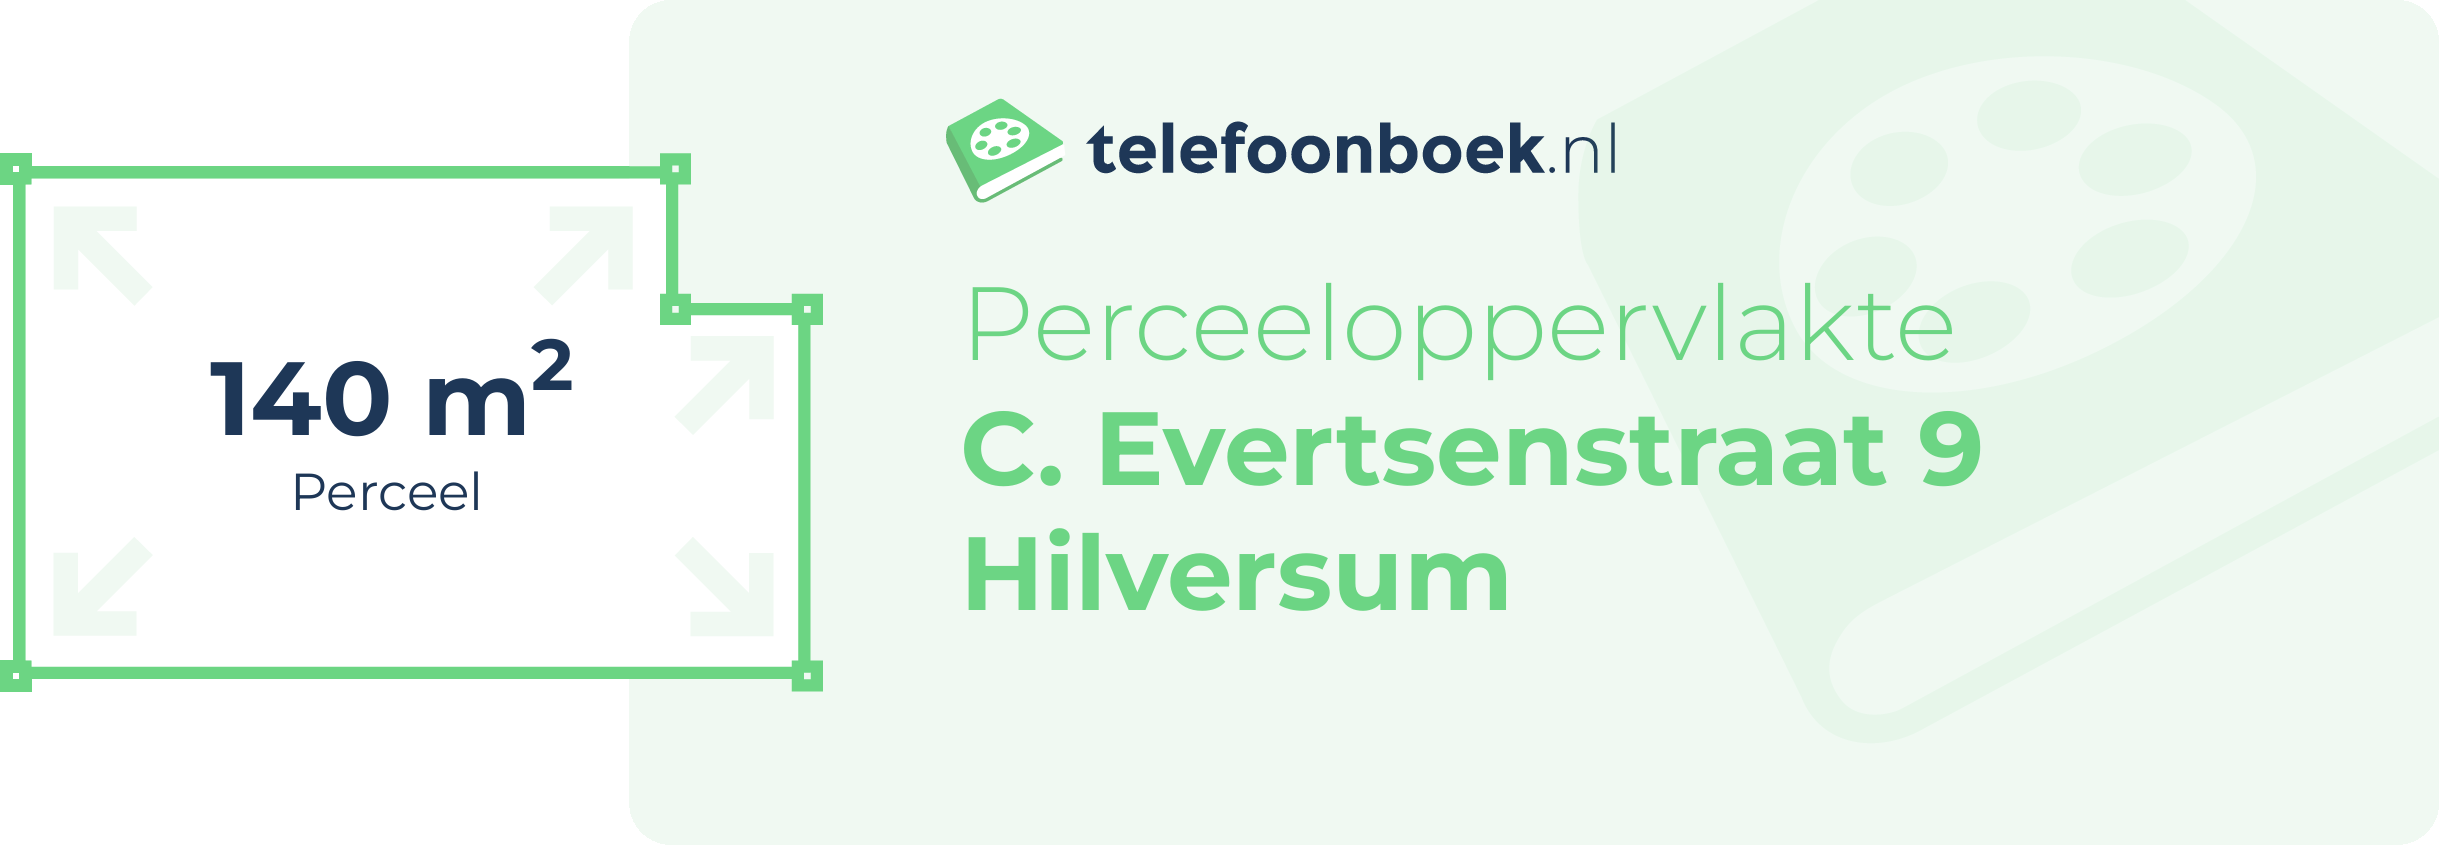 Perceeloppervlakte C. Evertsenstraat 9 Hilversum